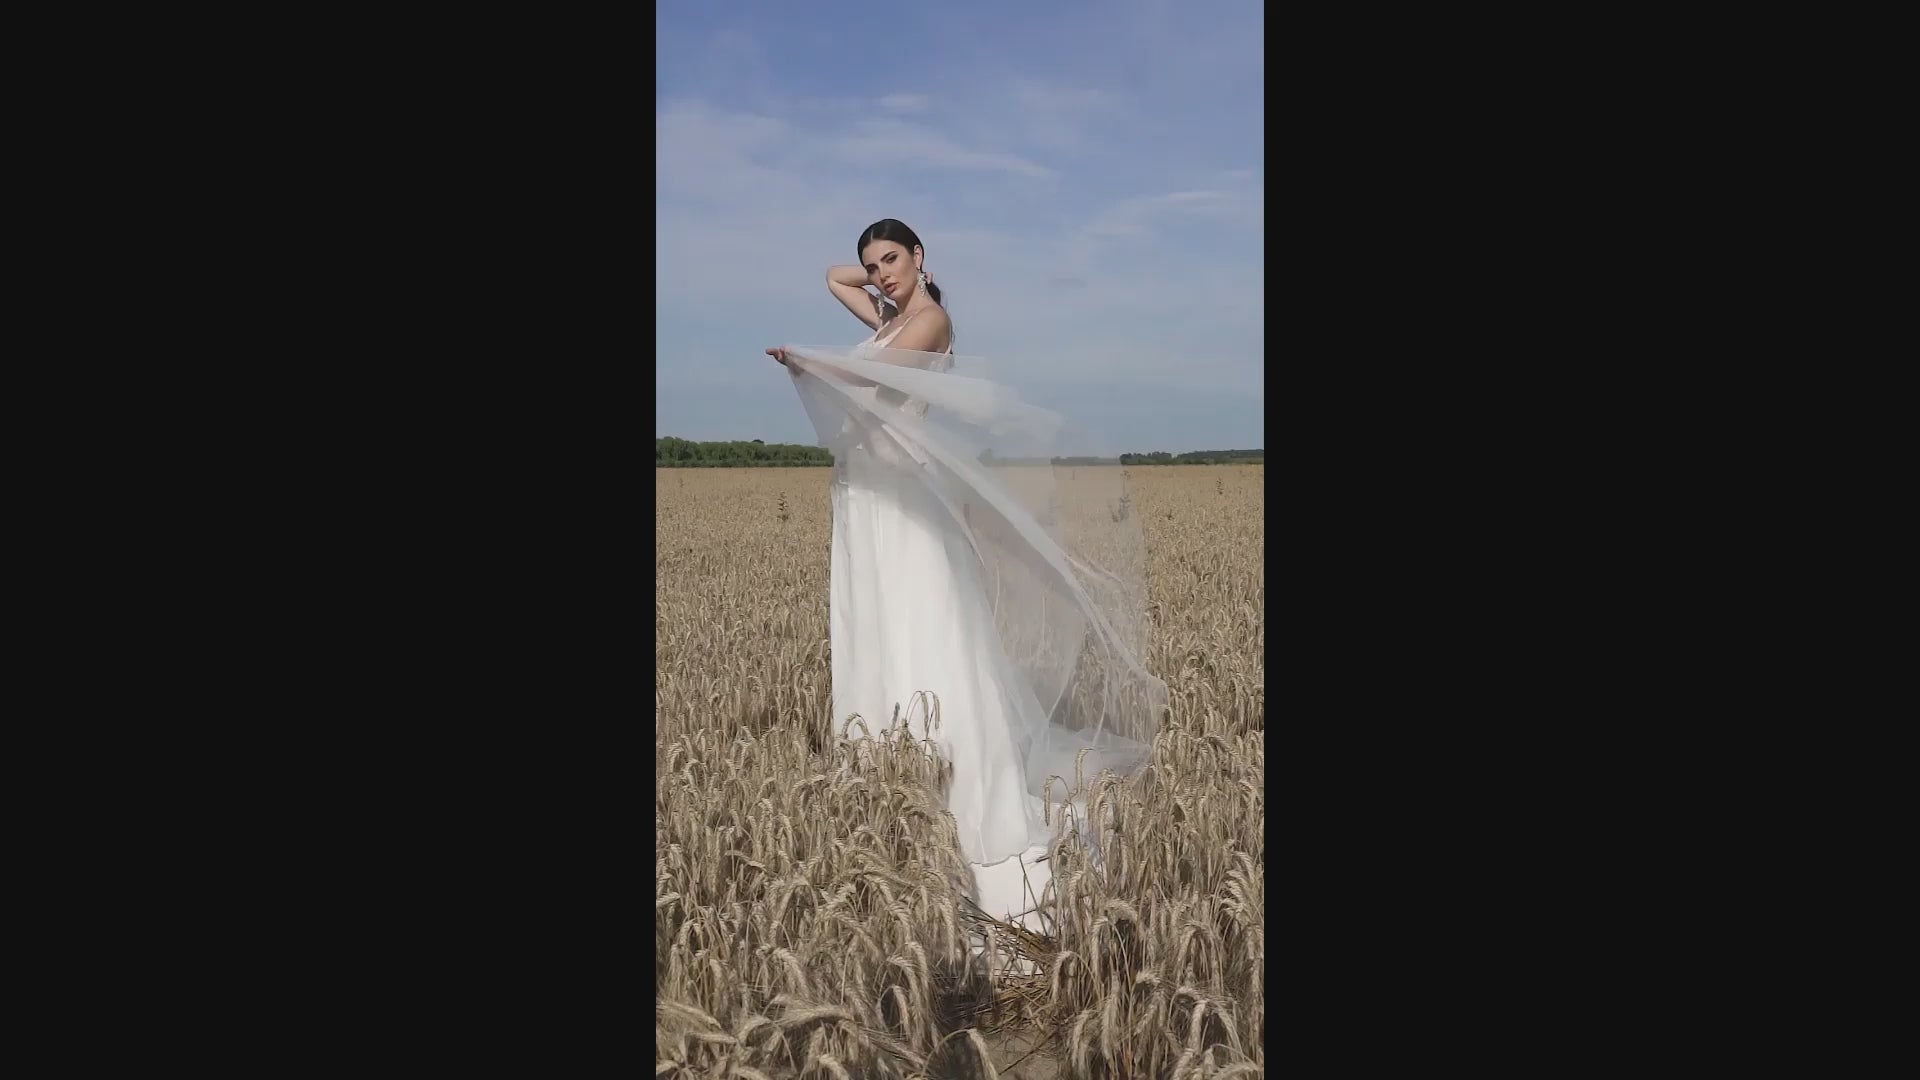 Ariellia A-line Scoop Ivory Wedding dress